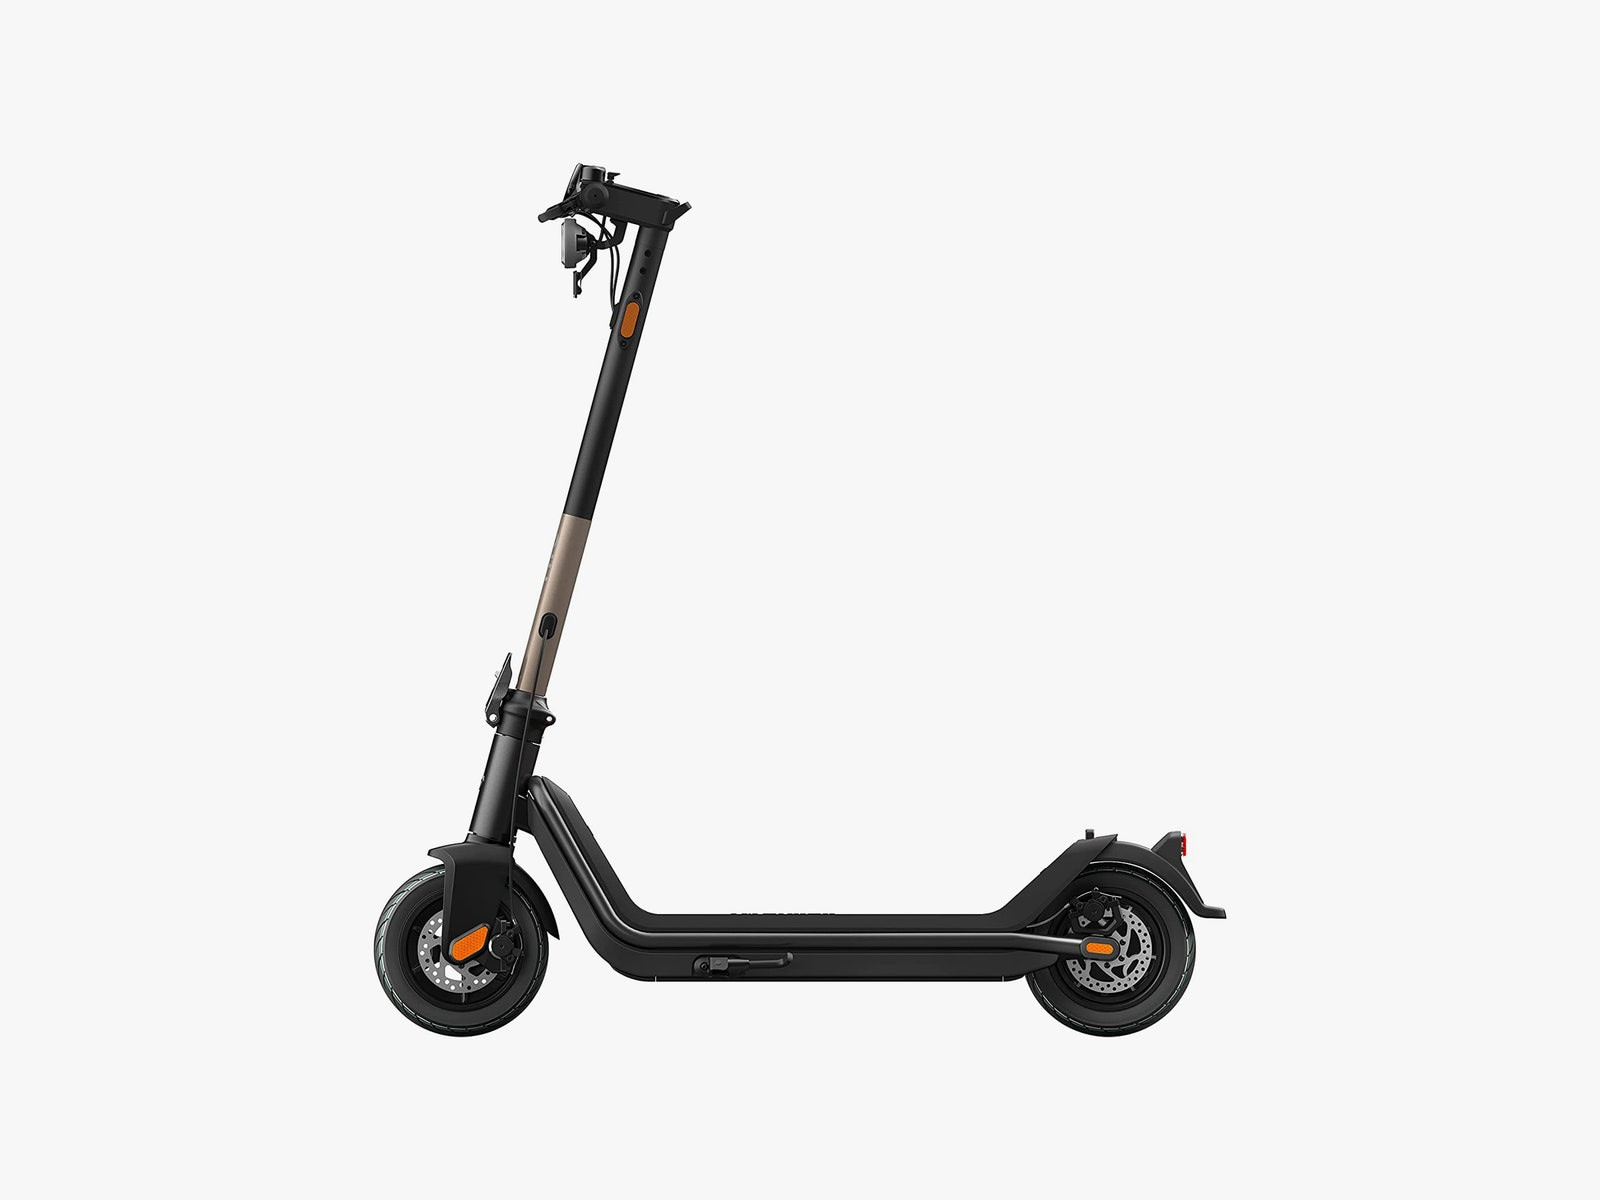 Niu KQi3 Pro electric scooter